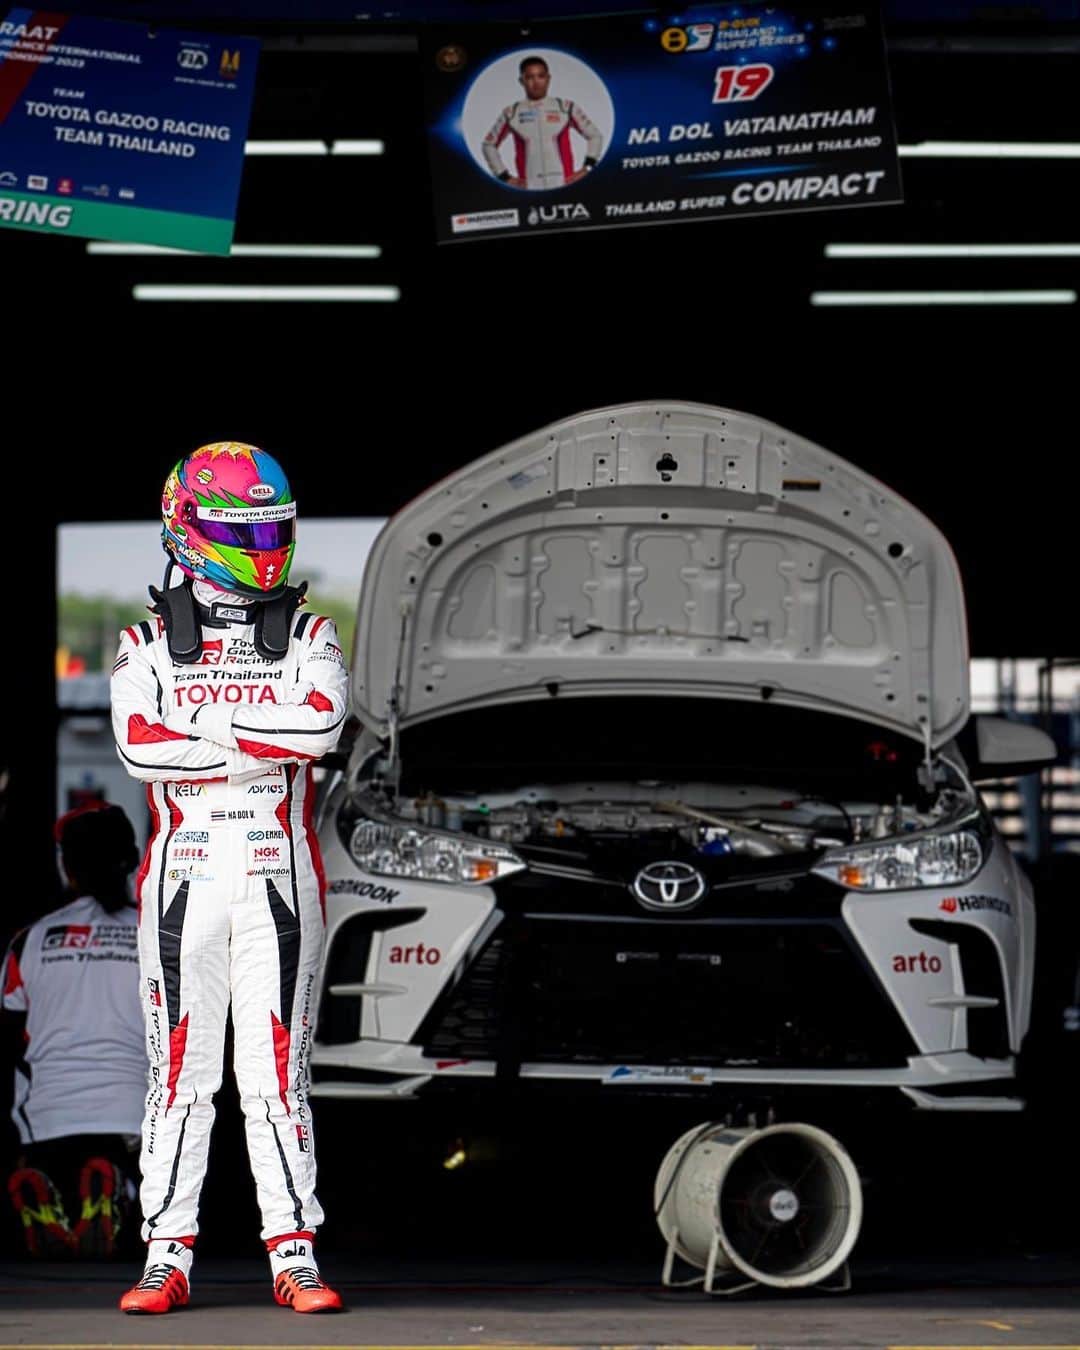 Toyota team thailandのインスタグラム：「🚨Ready for the Race!! 📌ณ ดล x Yaris e-Fuel หมายเลข 19 Toyota Gazoo Racing team Thailand  ในรุ่น Thailand Super Compact  เร่งให้สุดแรงไปกับครั้งแรกของ Toyota Yaris e-Fuel Carbon Neutral รถยนต์ที่กำลังพัฒนาให้สามารถใช้พลังงานเชื้อเพลิงซึ่งมีความเป็นกลางทางคาร์บอน นวัตกรรมที่จะเปลี่ยนโลกในอนาคต   #ToyotaGazooRacingteamThailand」